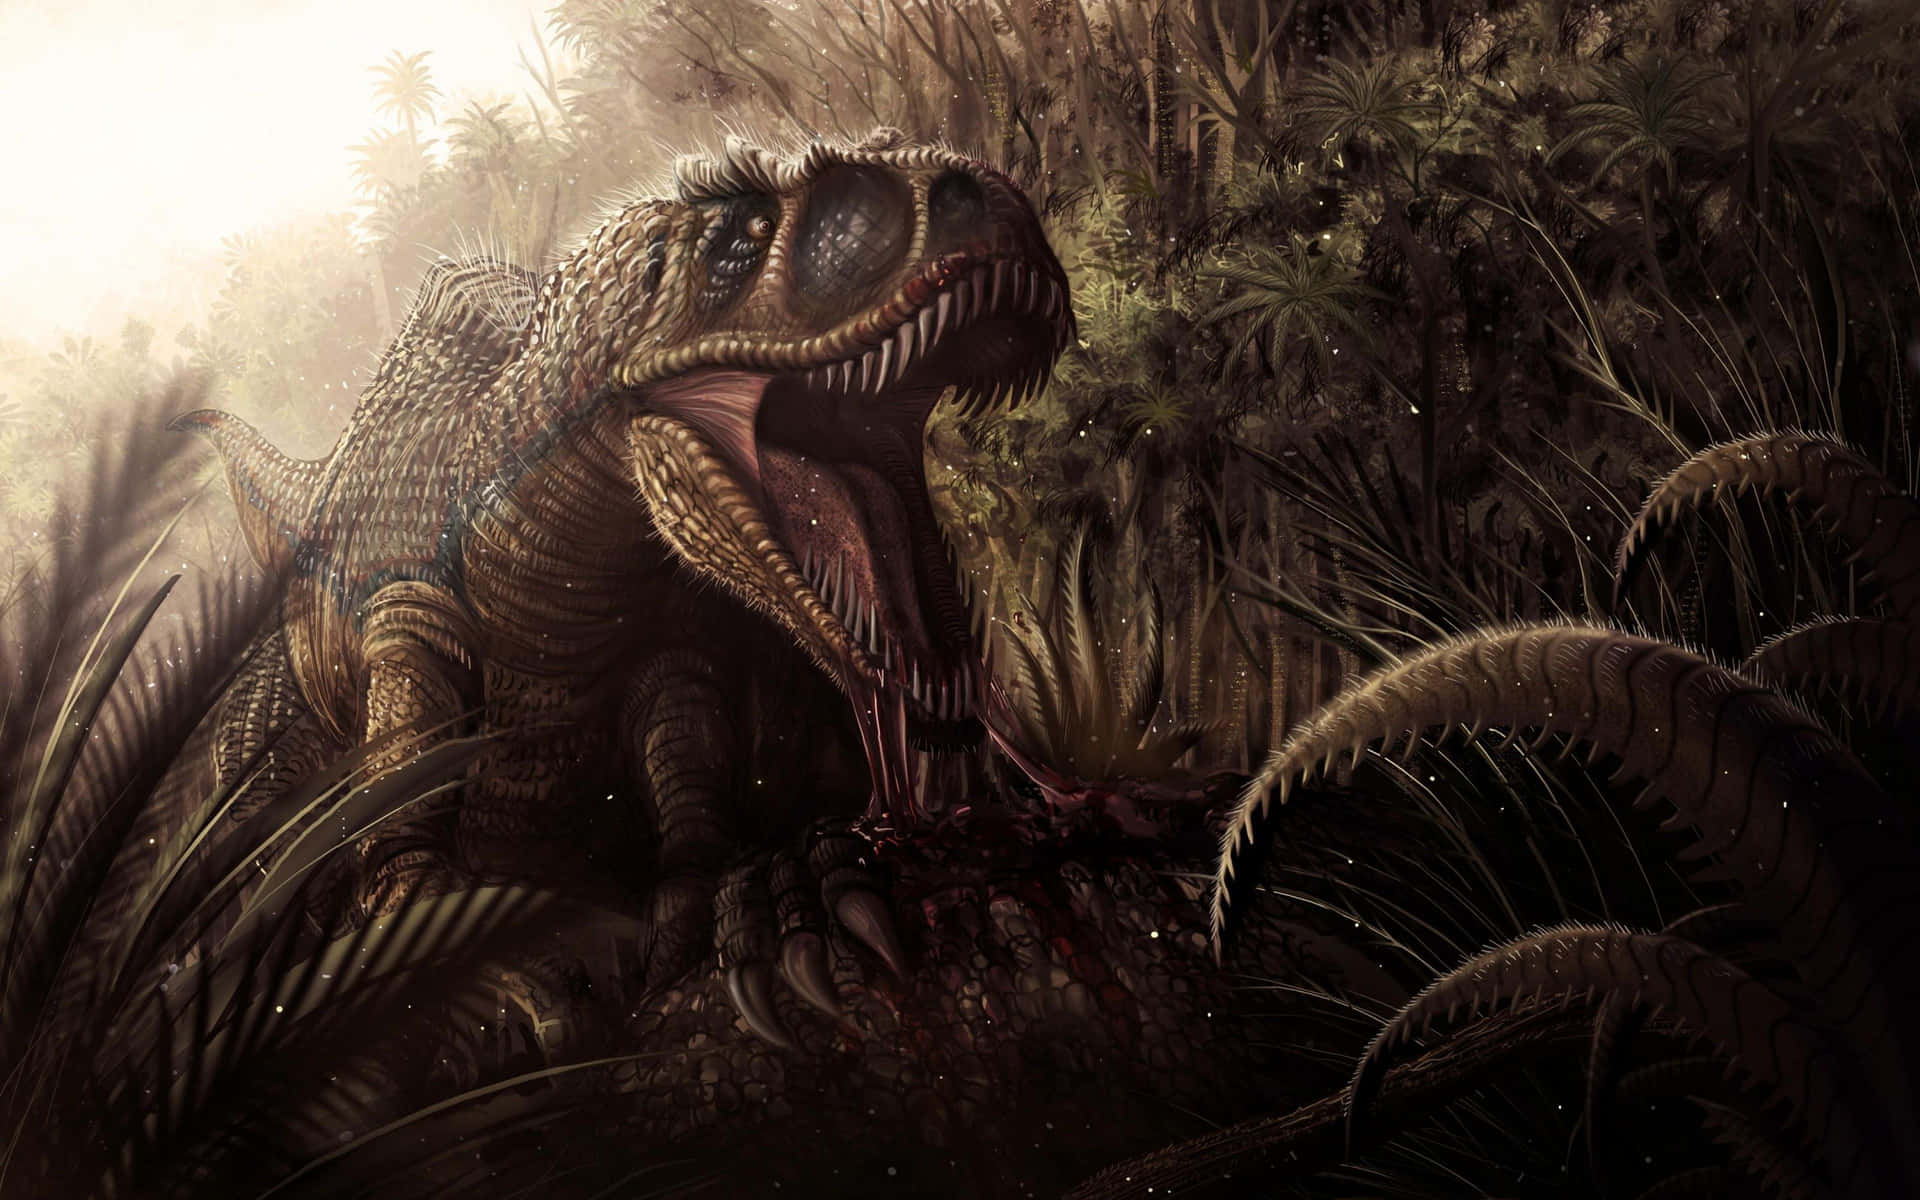 A Majestic Tyrannosaurus Rex Roaming the Lands